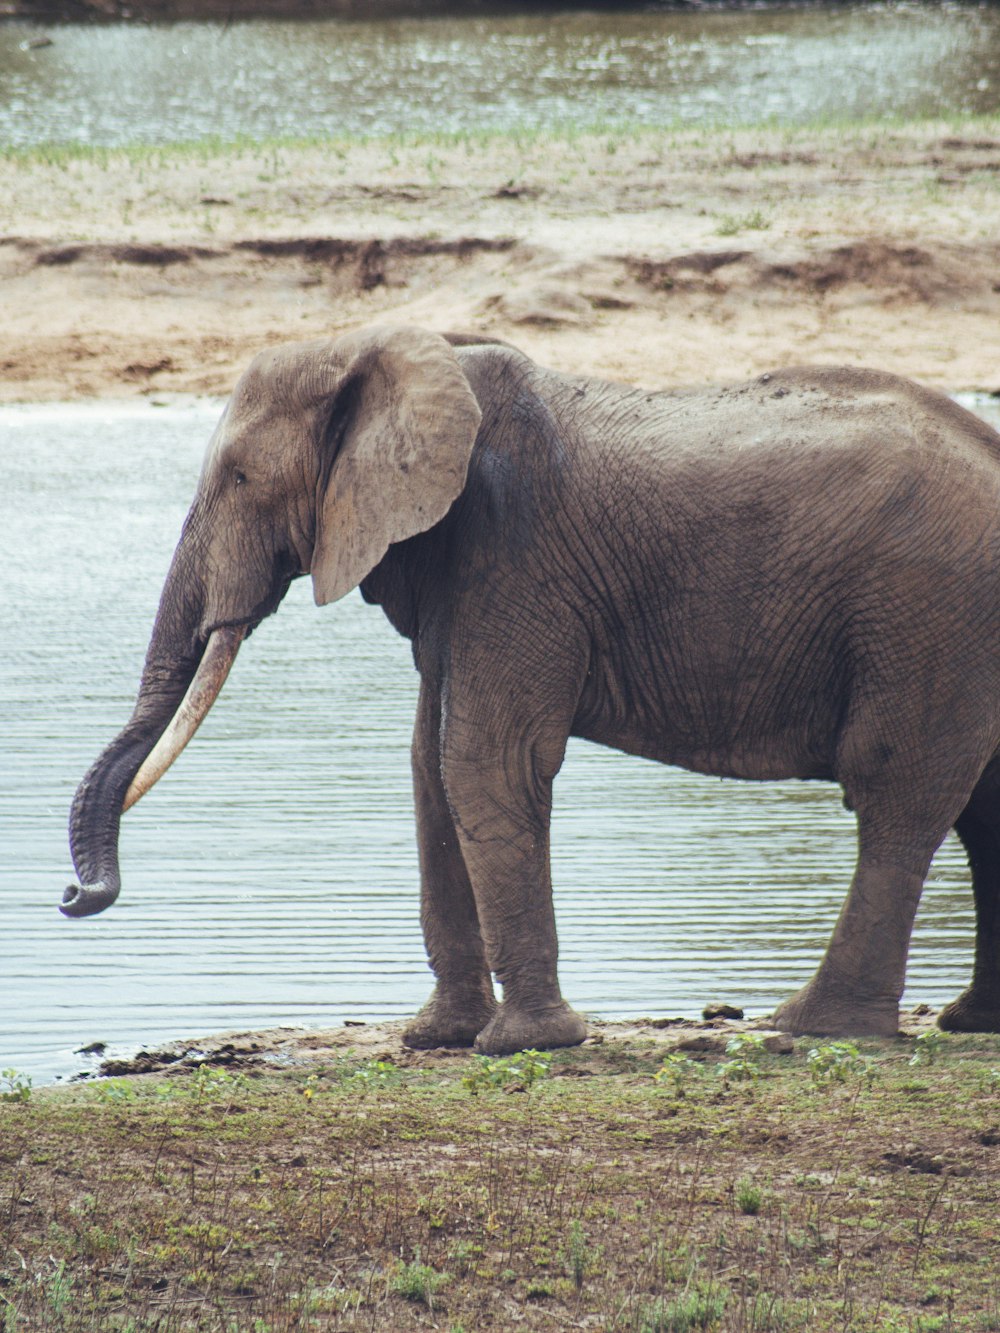 an elephant with tusks